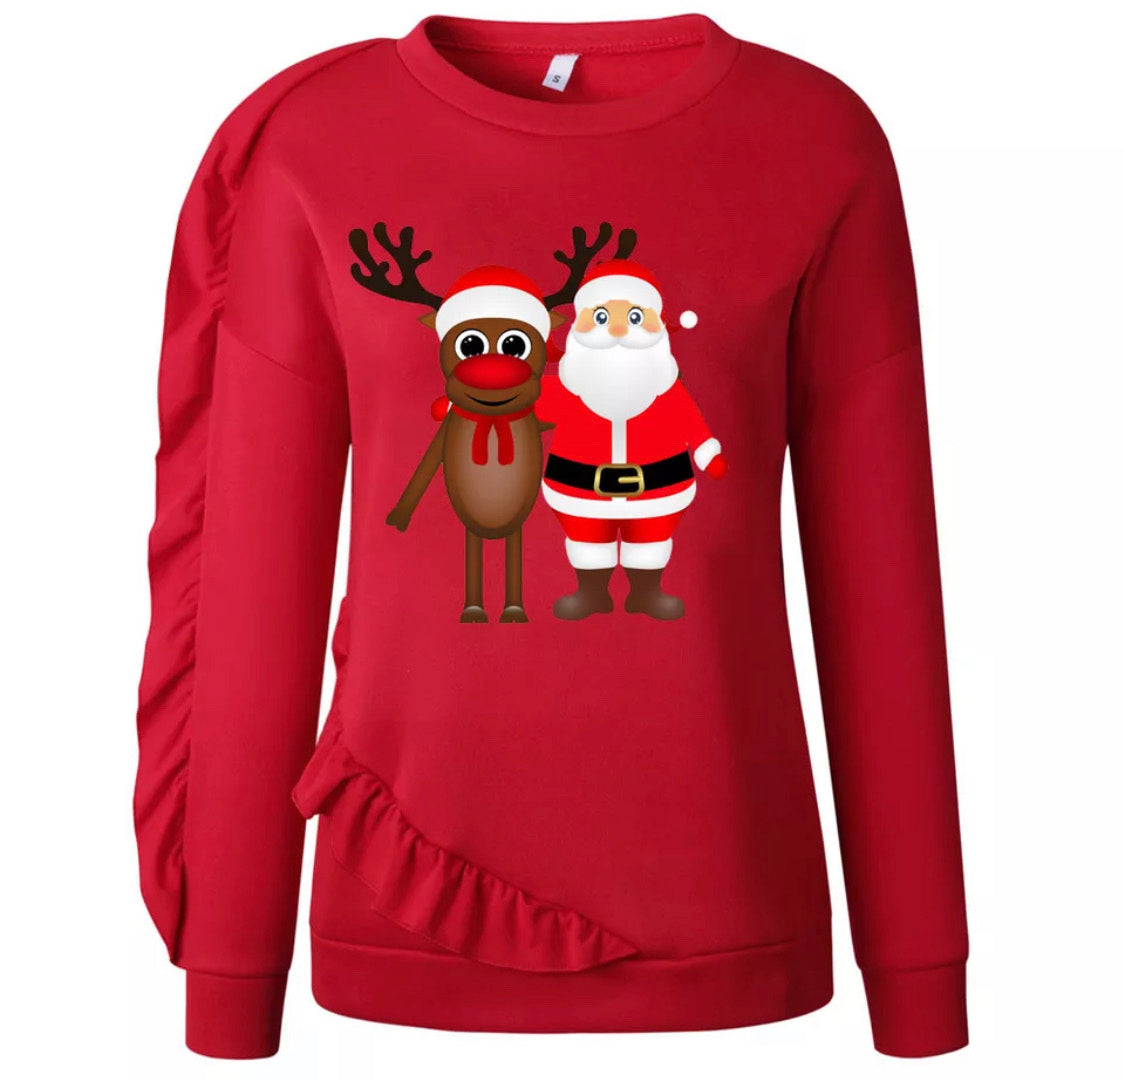 Santa ugly Christmas sweaters